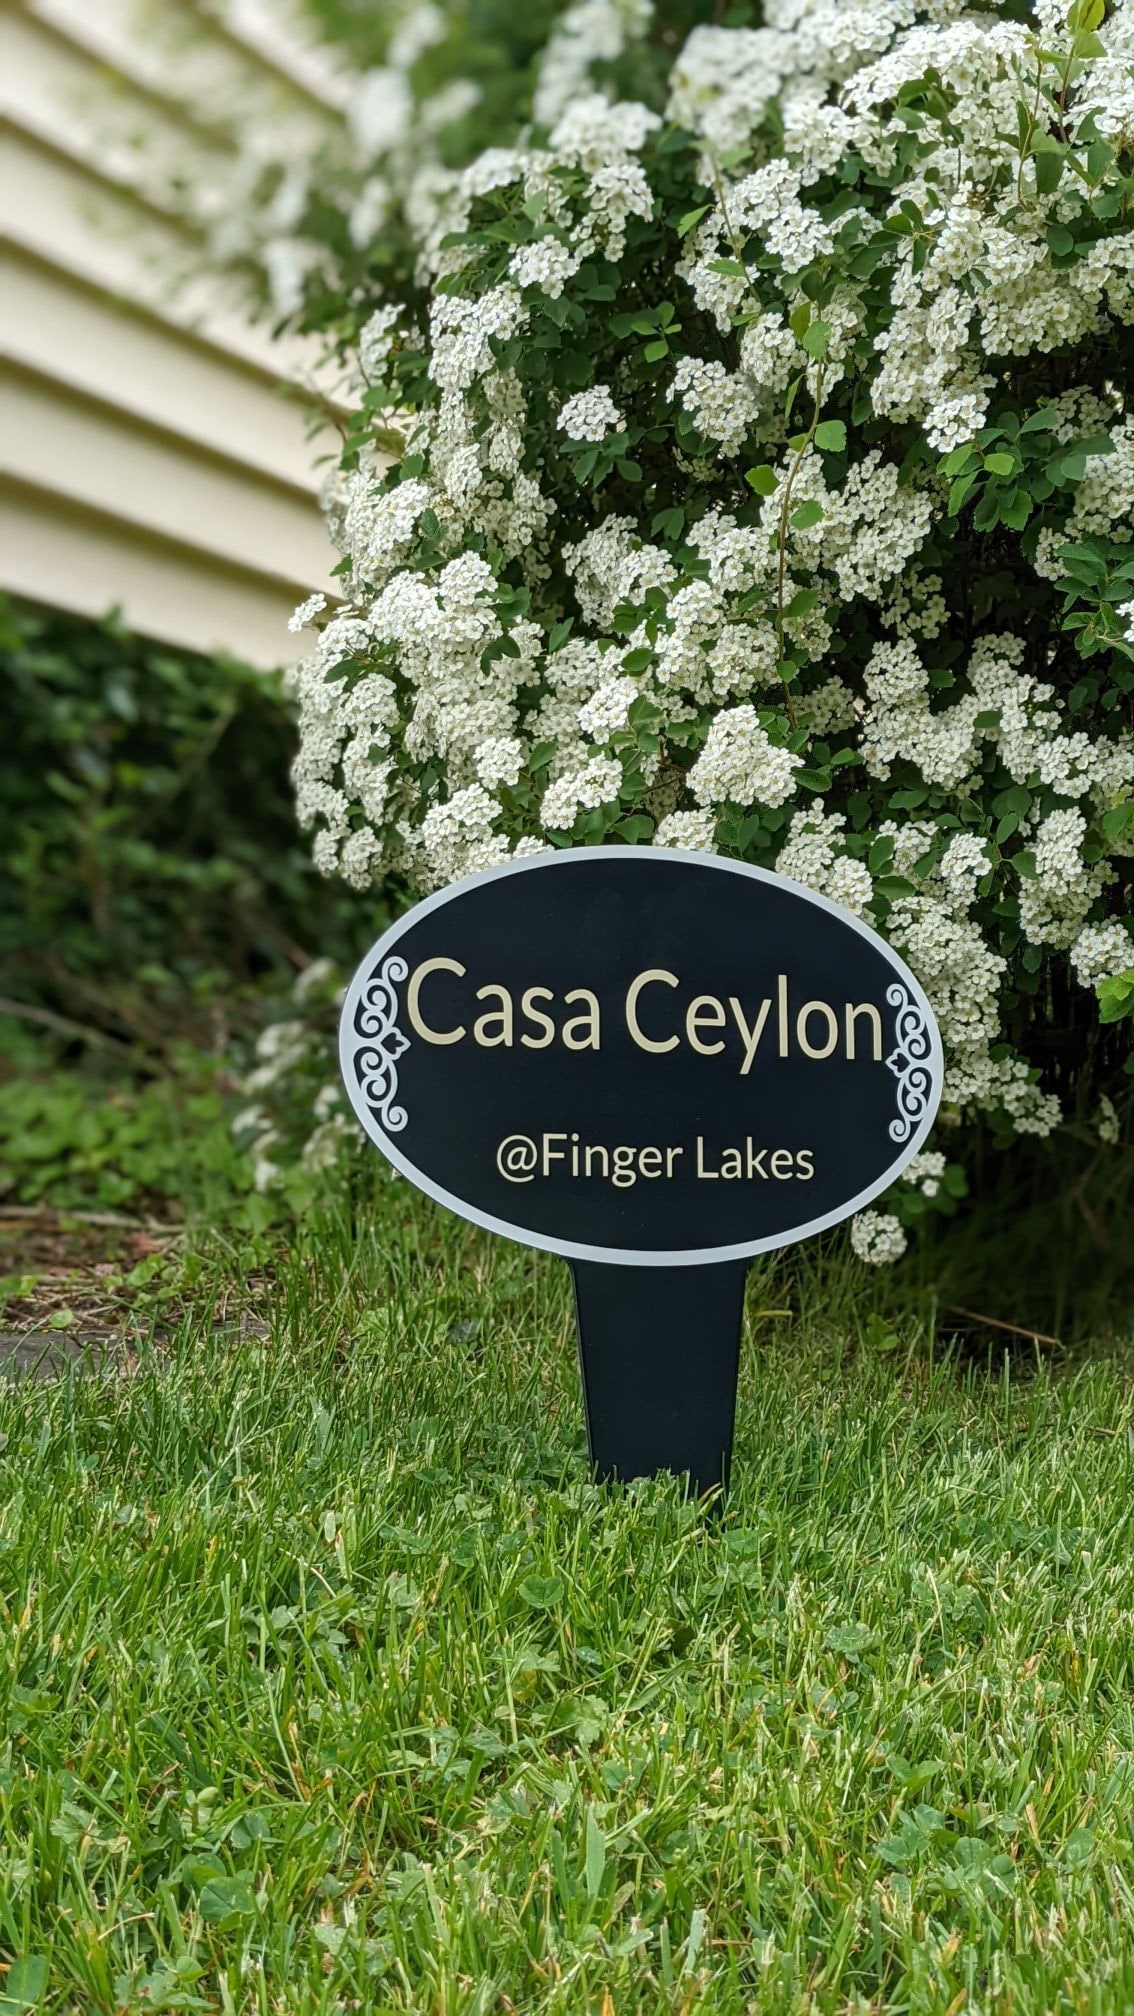 Casa Ceylon in The Finger Lakes